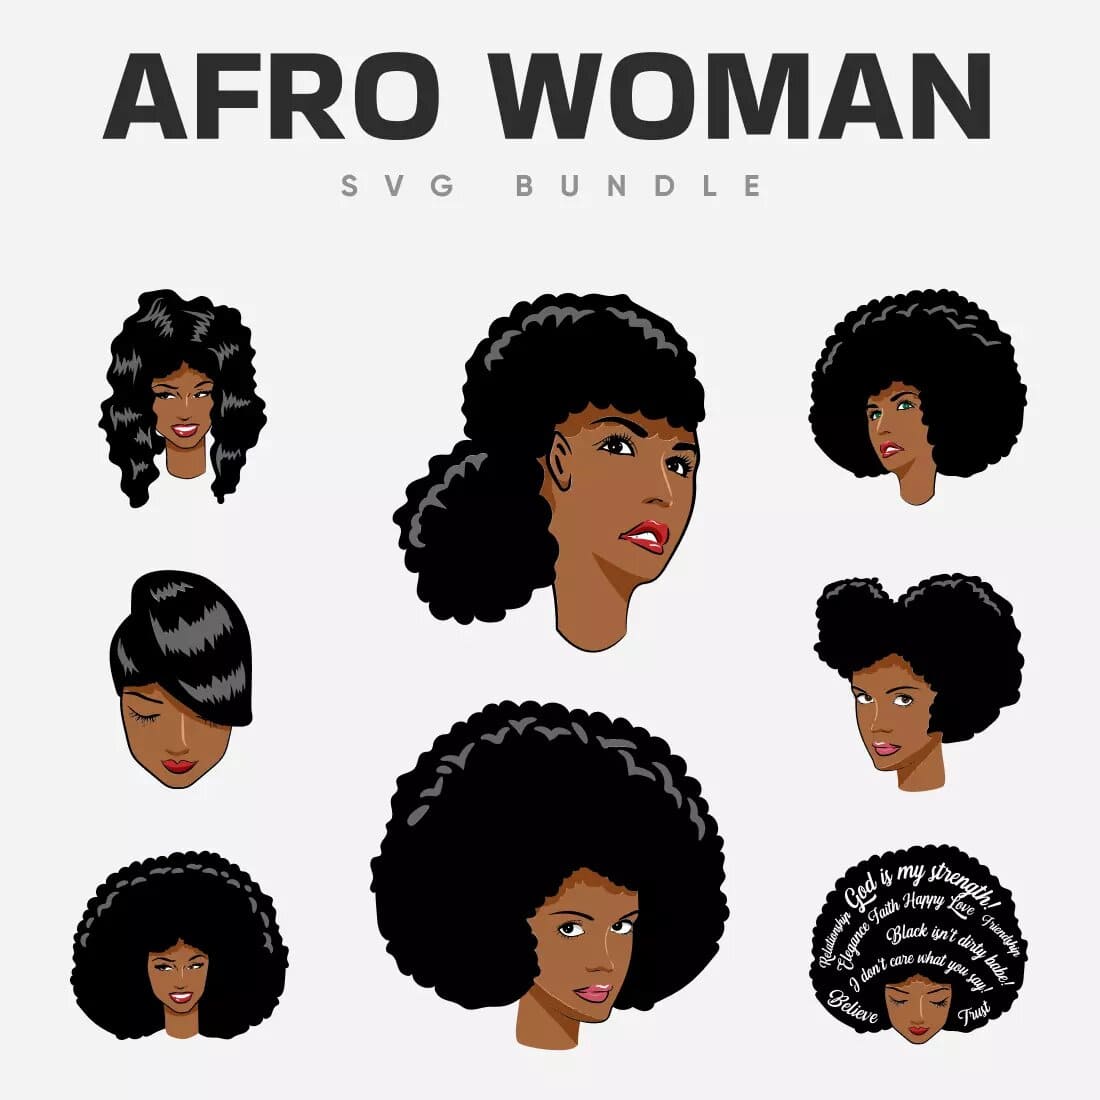 Afro Woman SVG Bundle Preview 3.